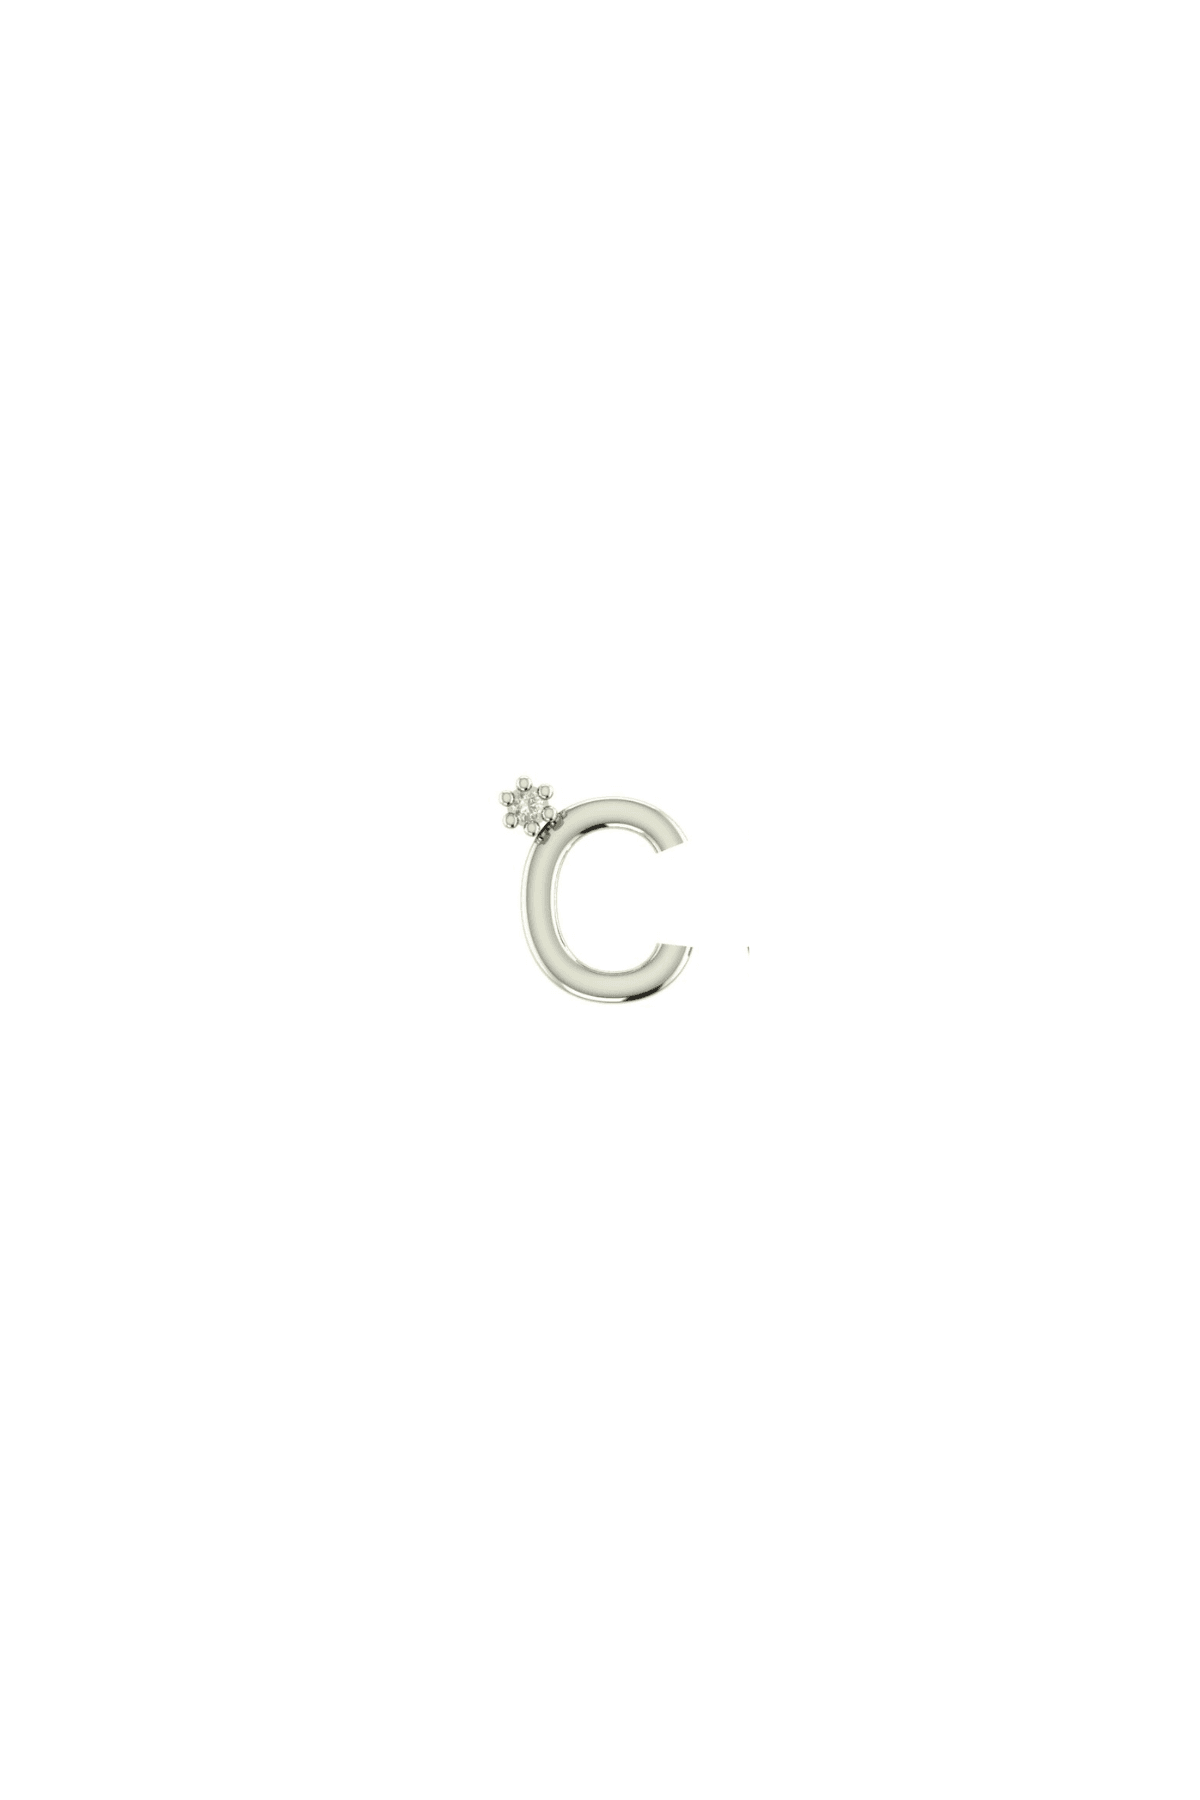 The Letter White Gold Cultured Diamond Stud Earring (Single)